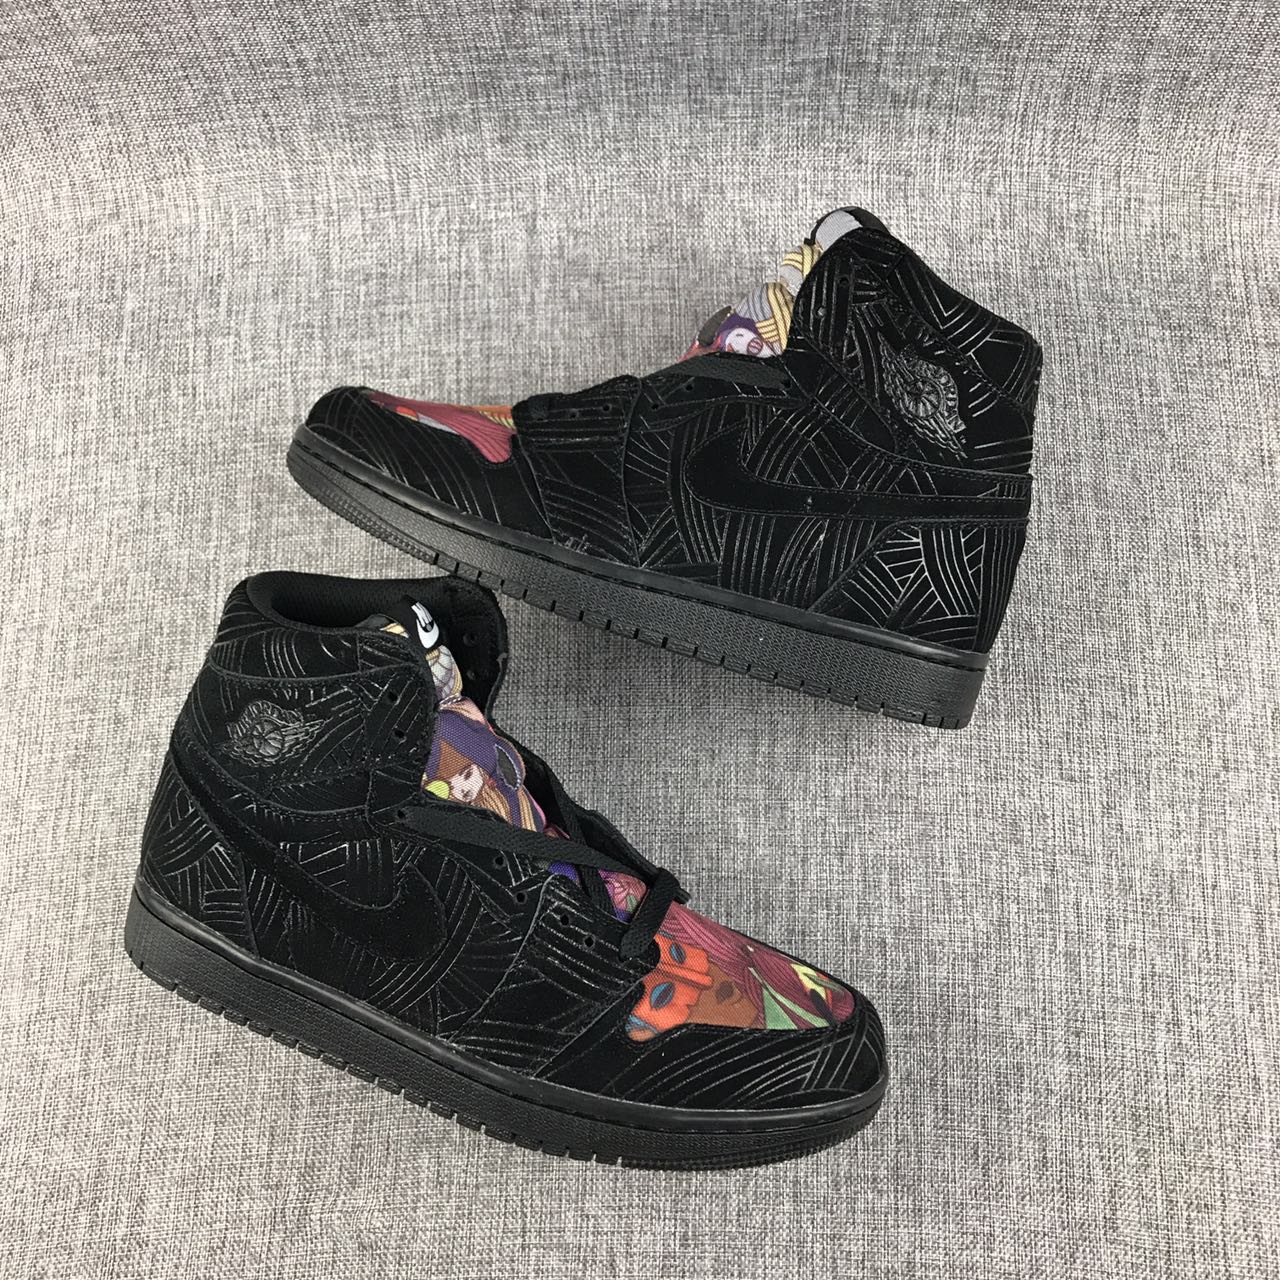 New Air Jordan 1 Laser Graffiti Black Colorful Shoes - Click Image to Close